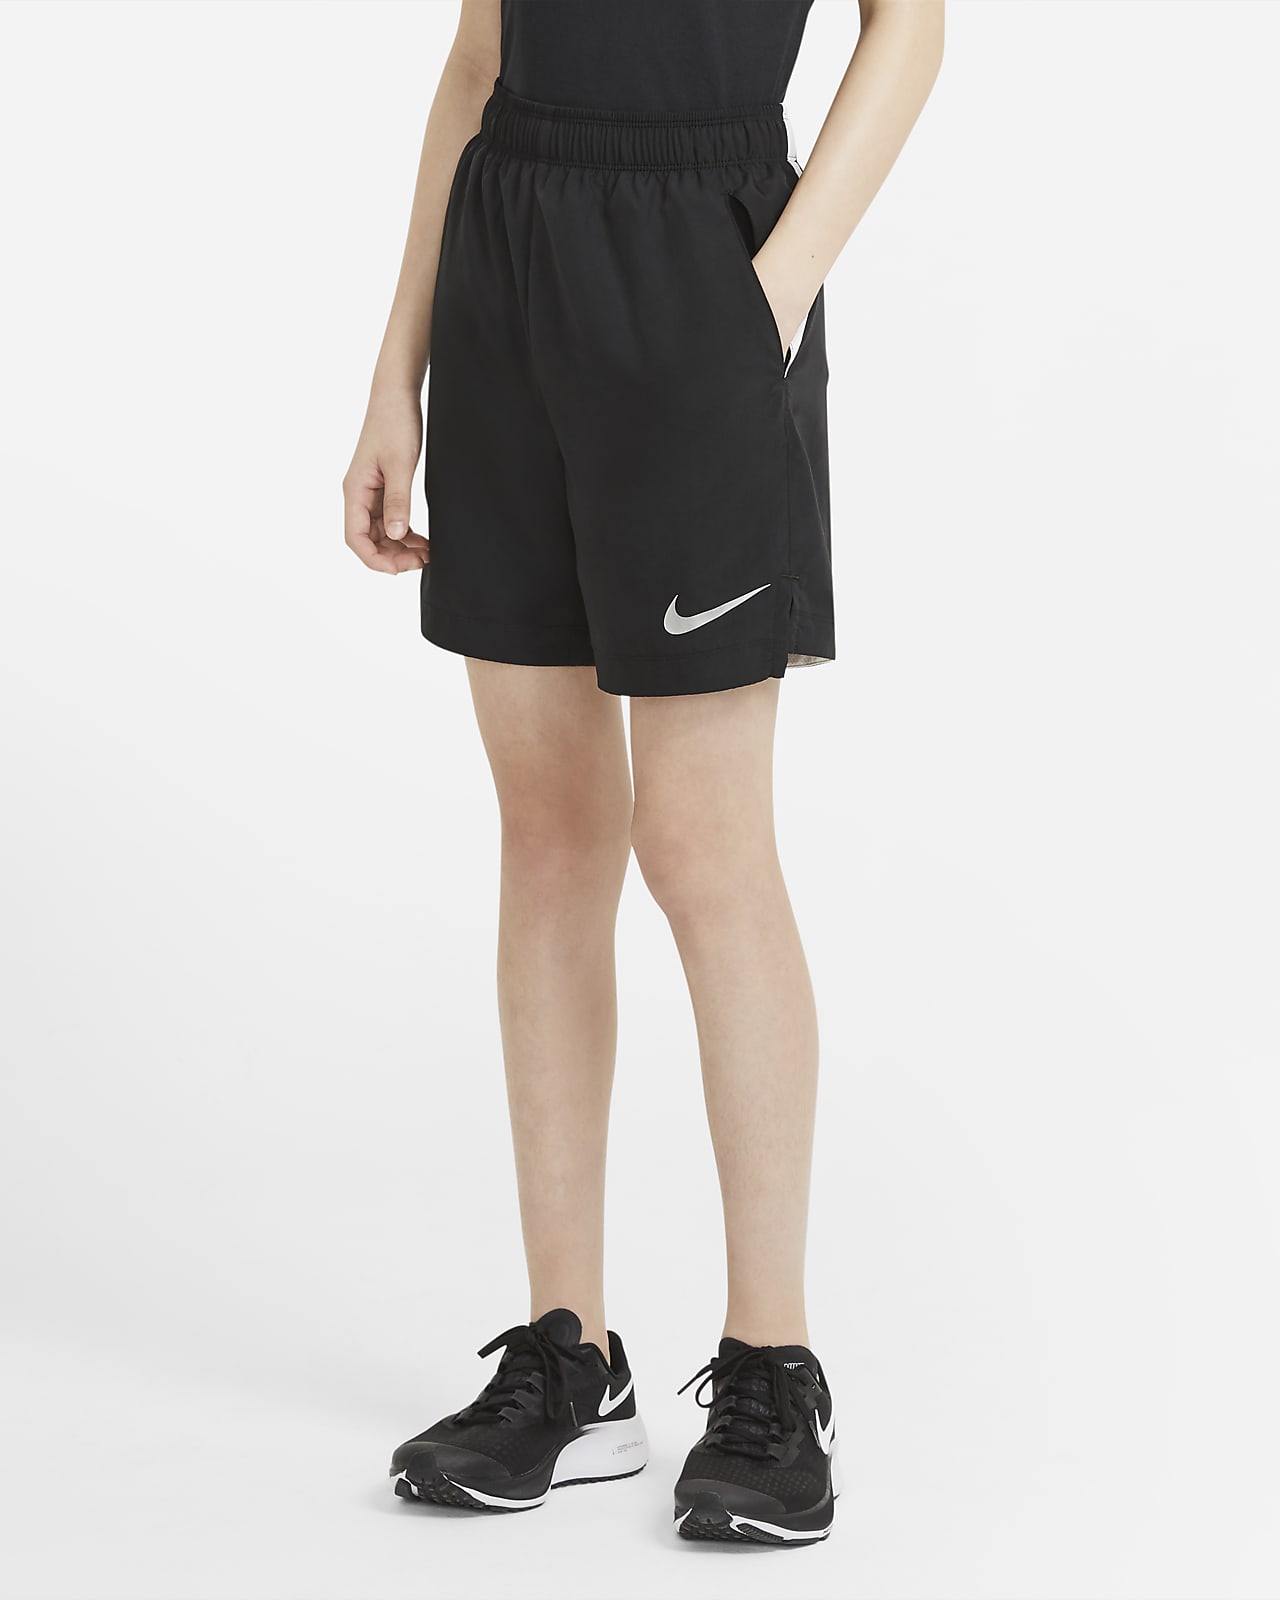 Nike Older Kids' (Boys') Training Shorts